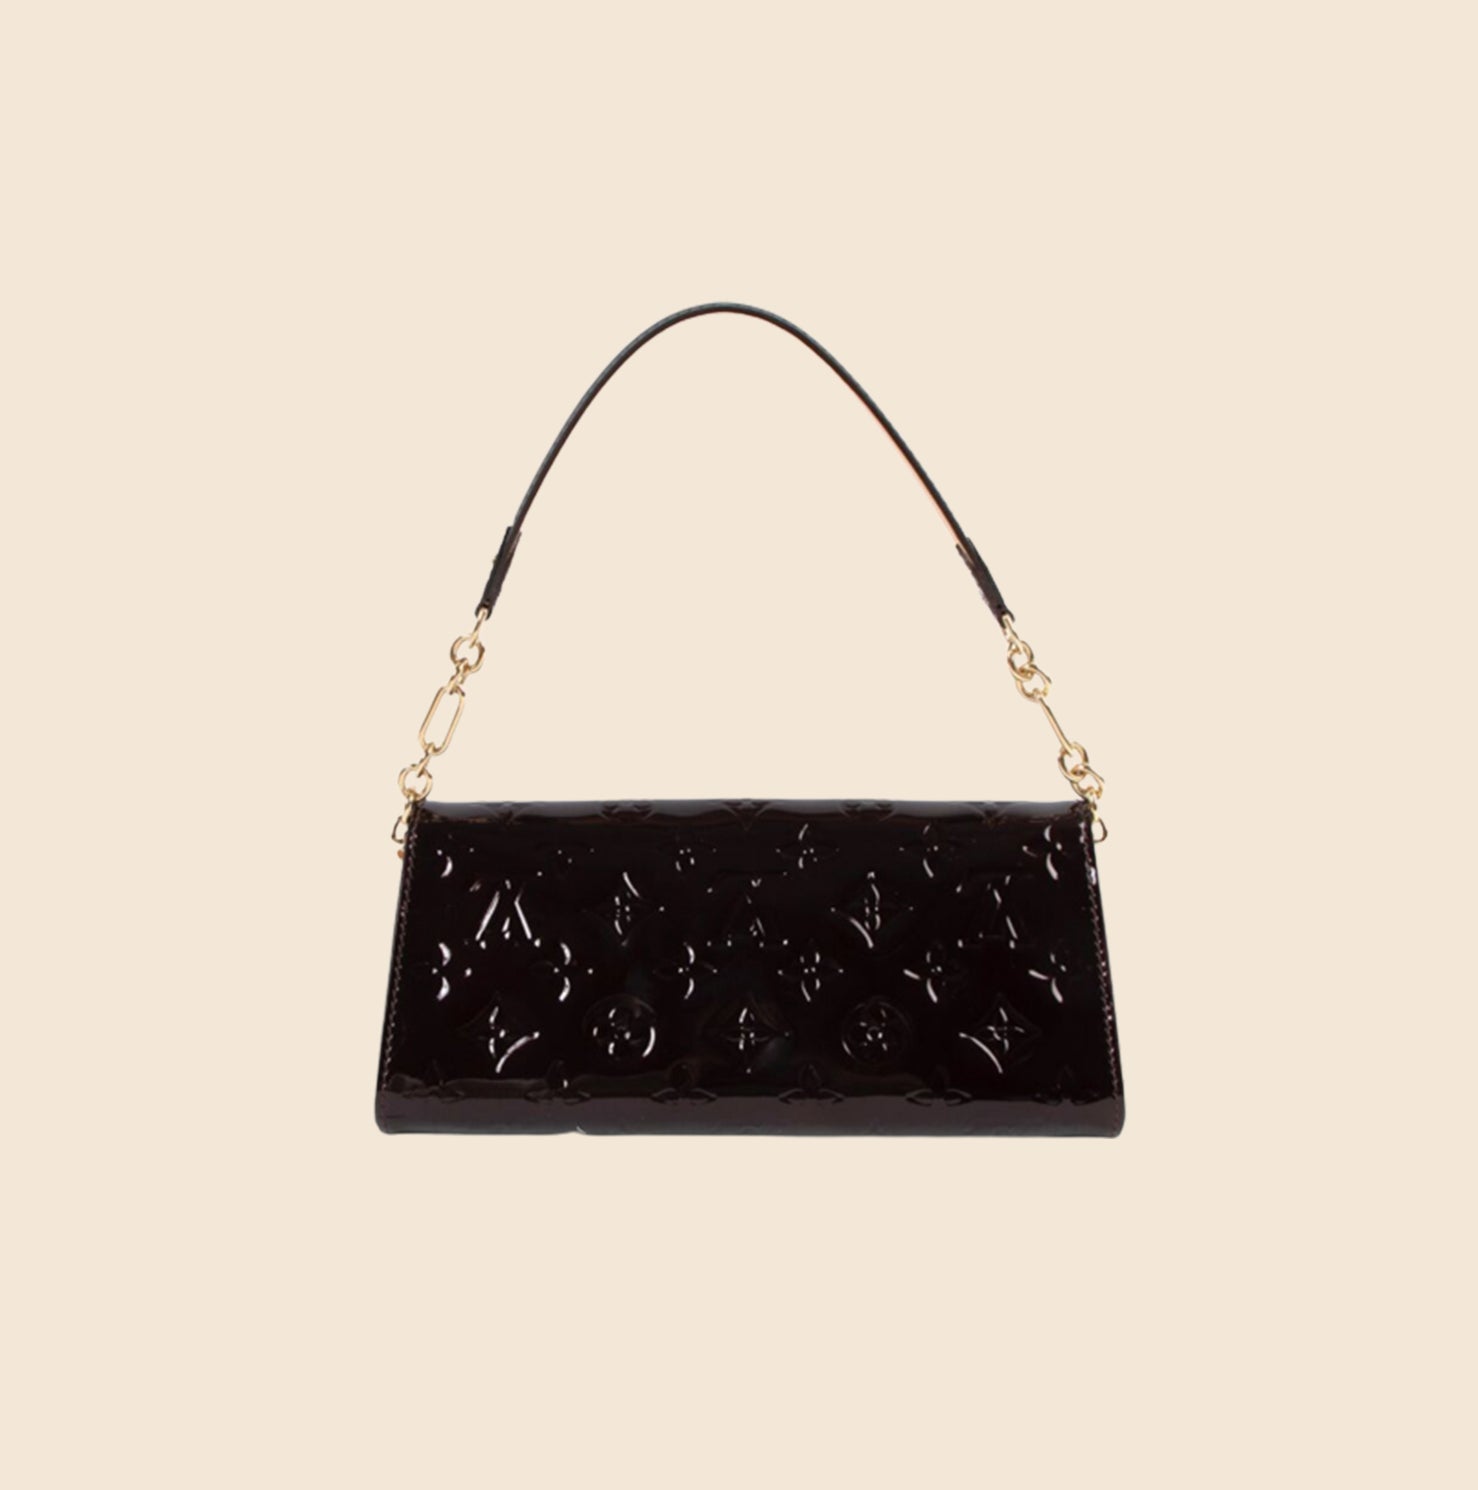 Louis Vuitton Sunset Boulevard Burgundy Patent Leather Shoulder Bag  (Pre-Owned) - ShopStyle